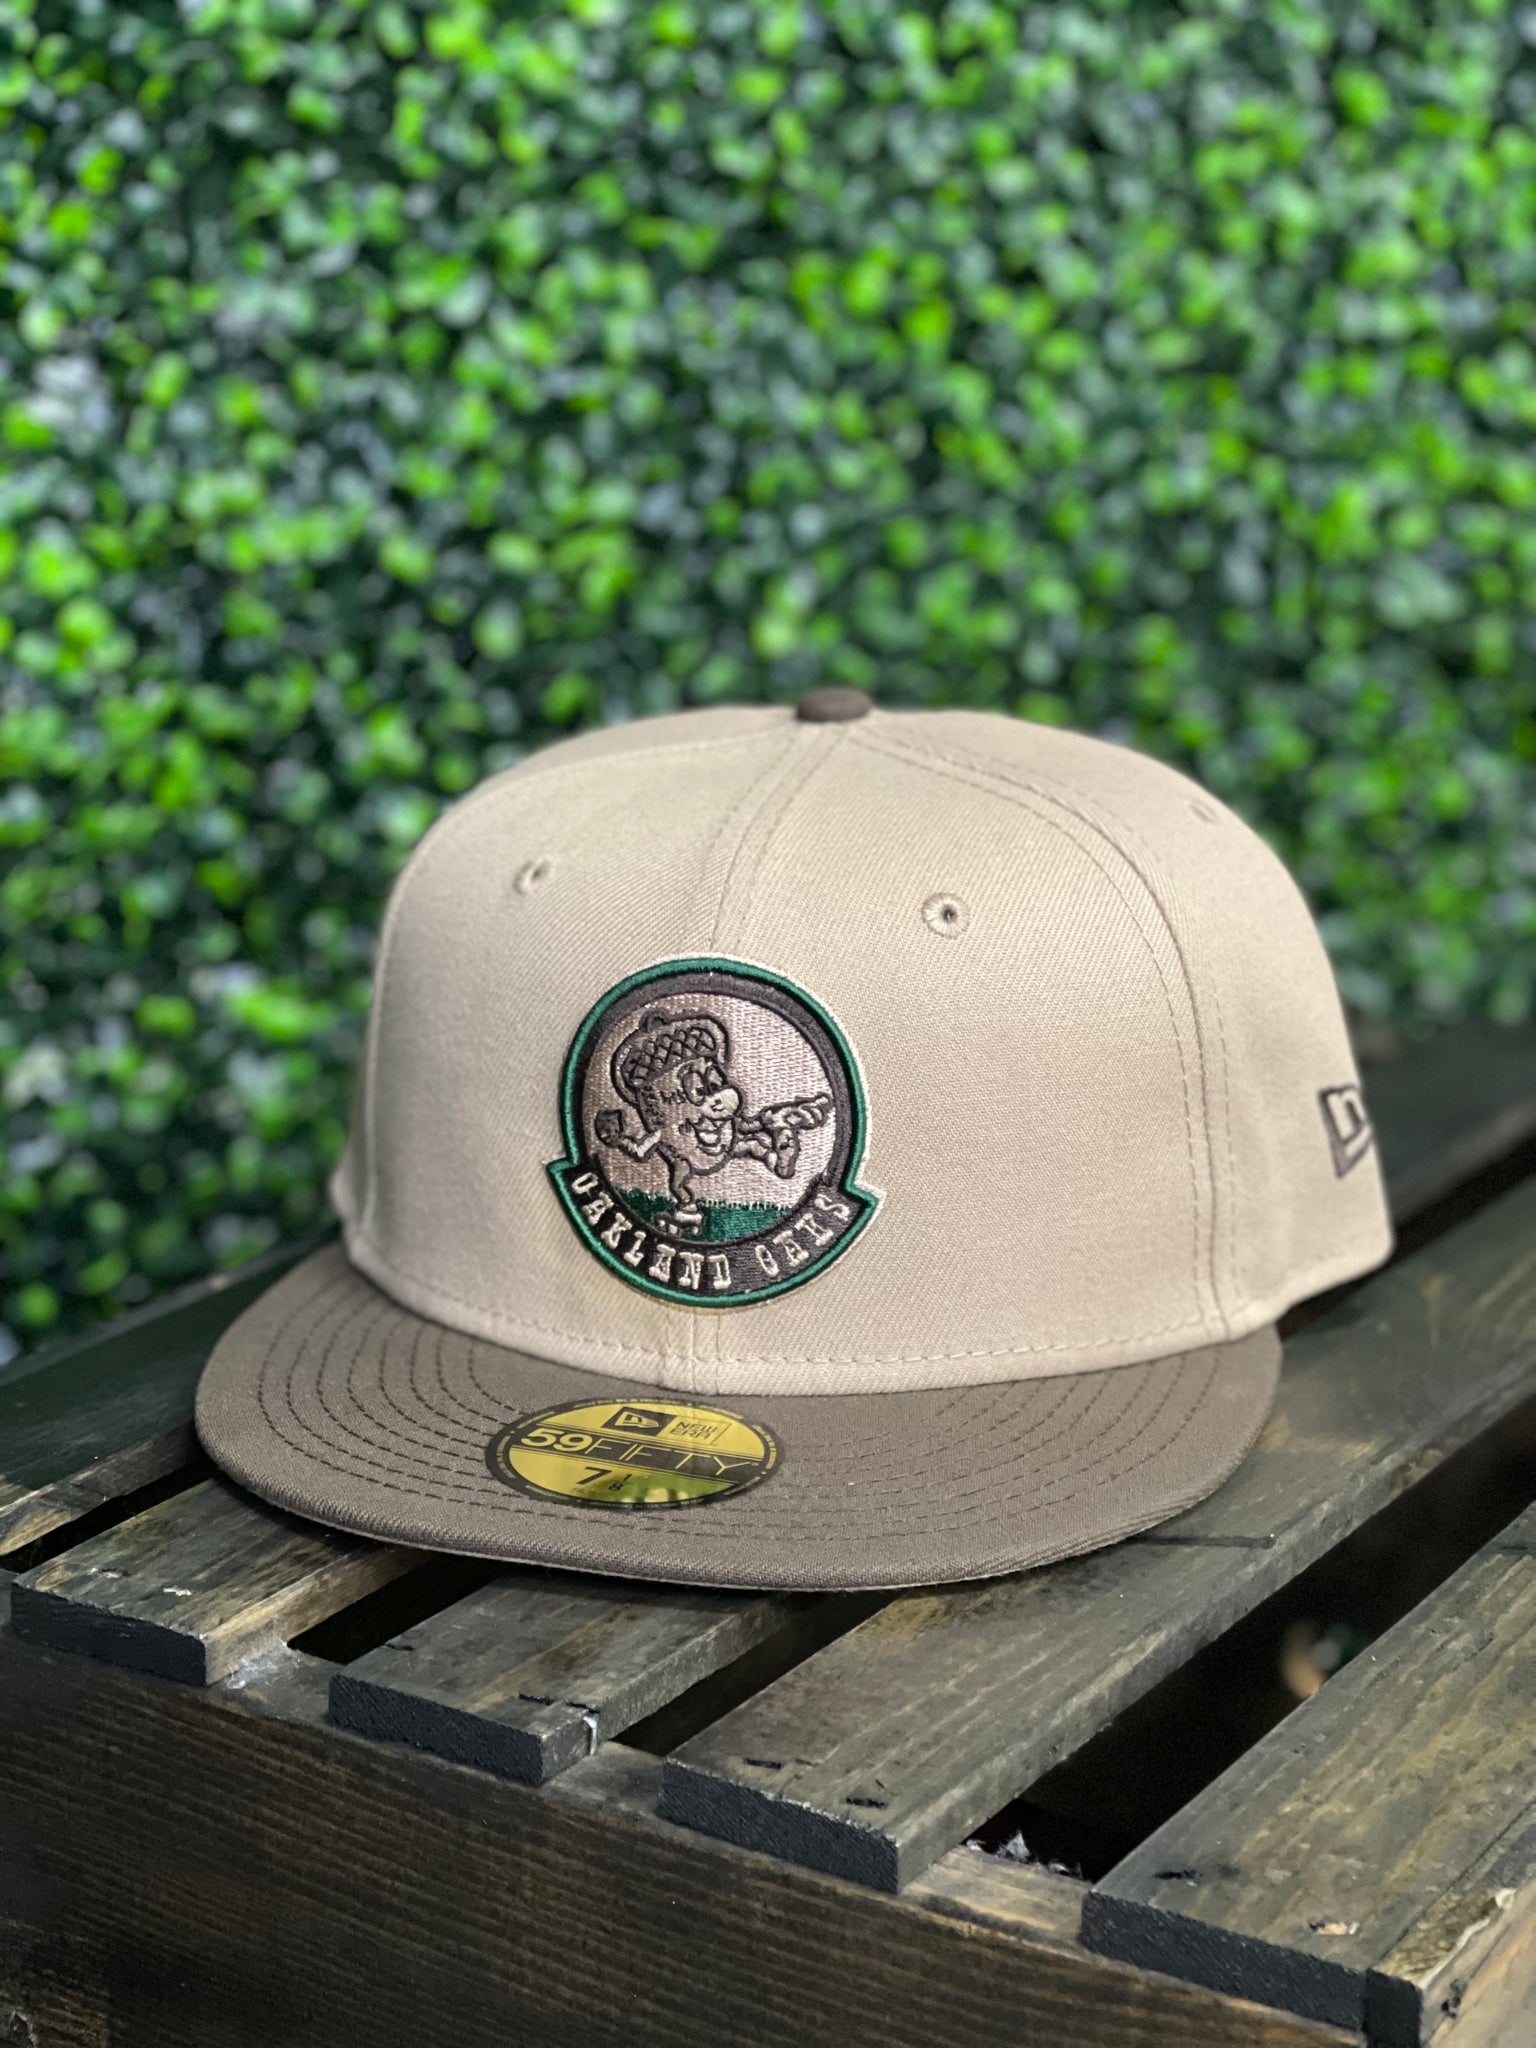 Boston Celtics So Fresh Green Snapback - Mitchell & Ness cap